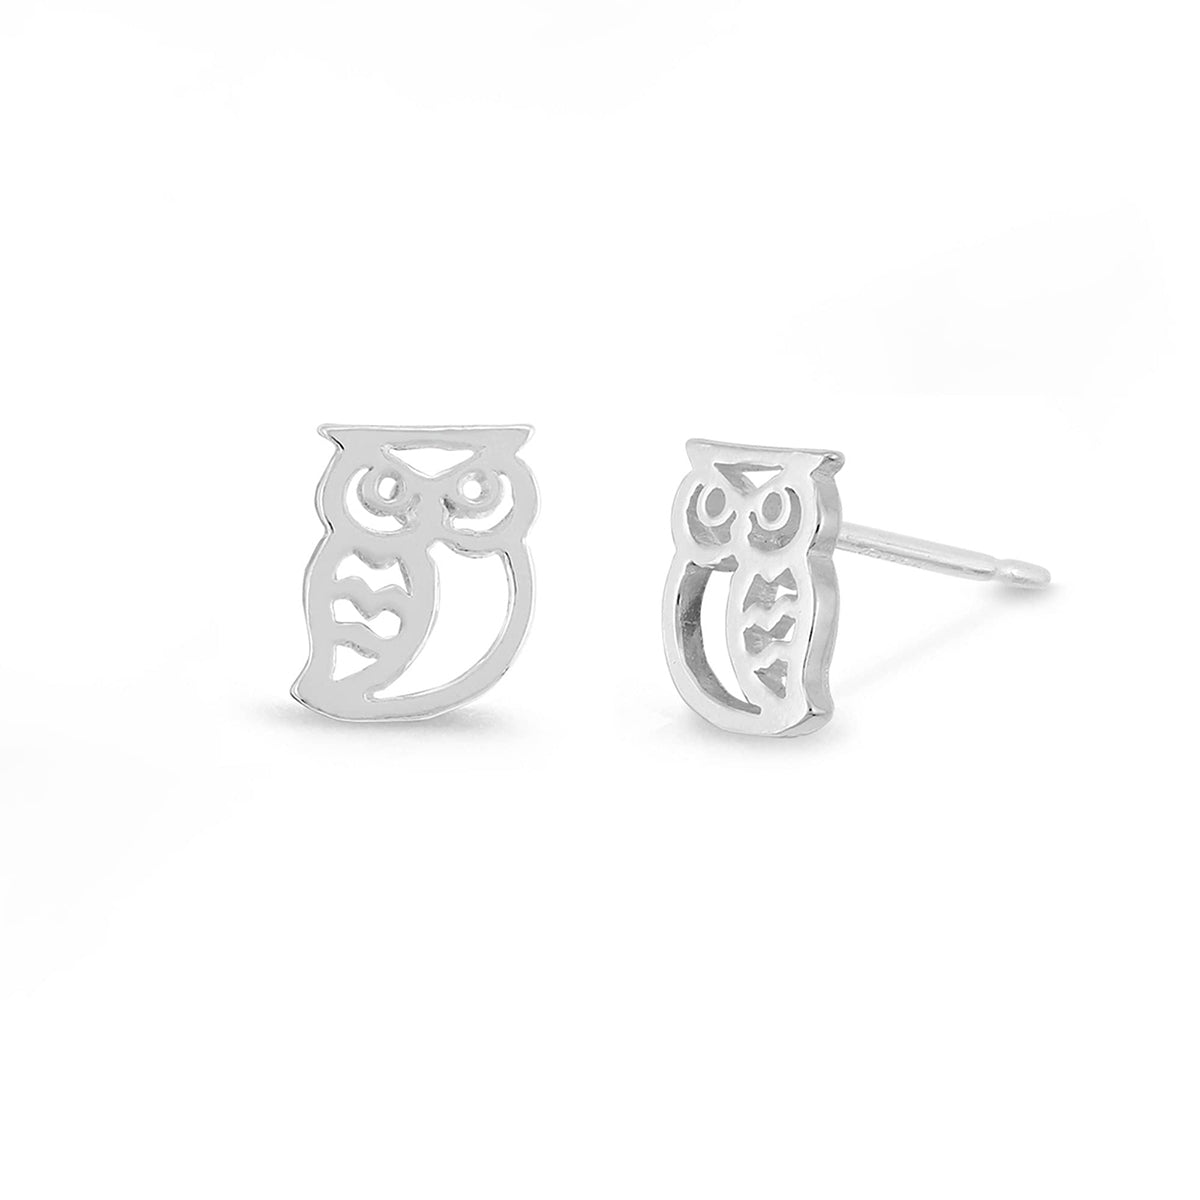 Boma Sterling Silver Post Earrings - Owl    